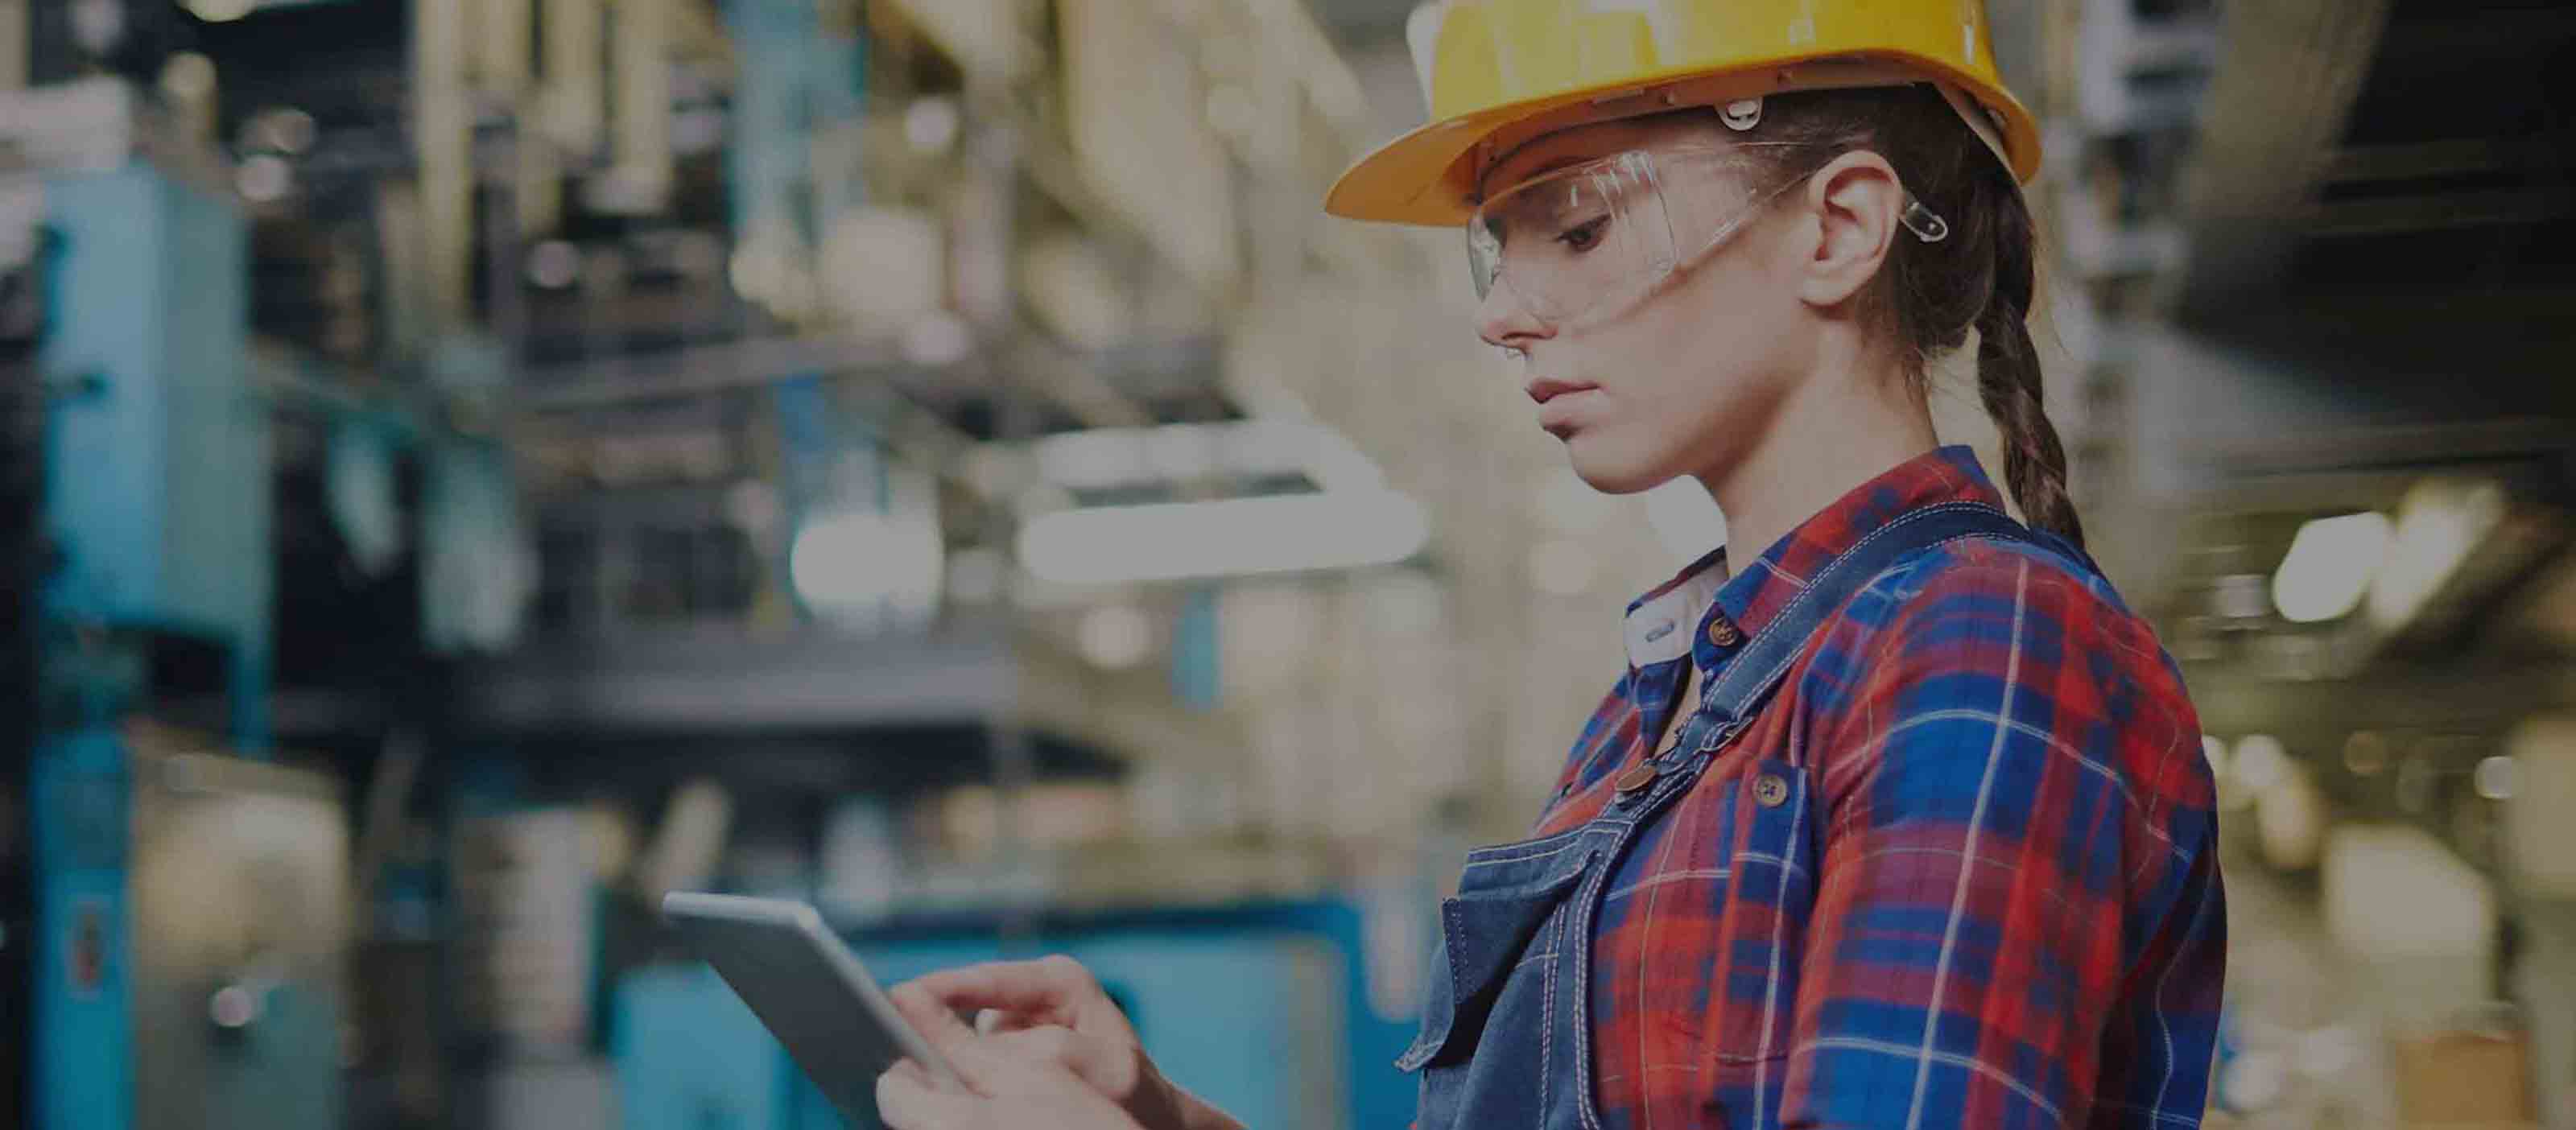 Connected worker using GE Digital industrial software